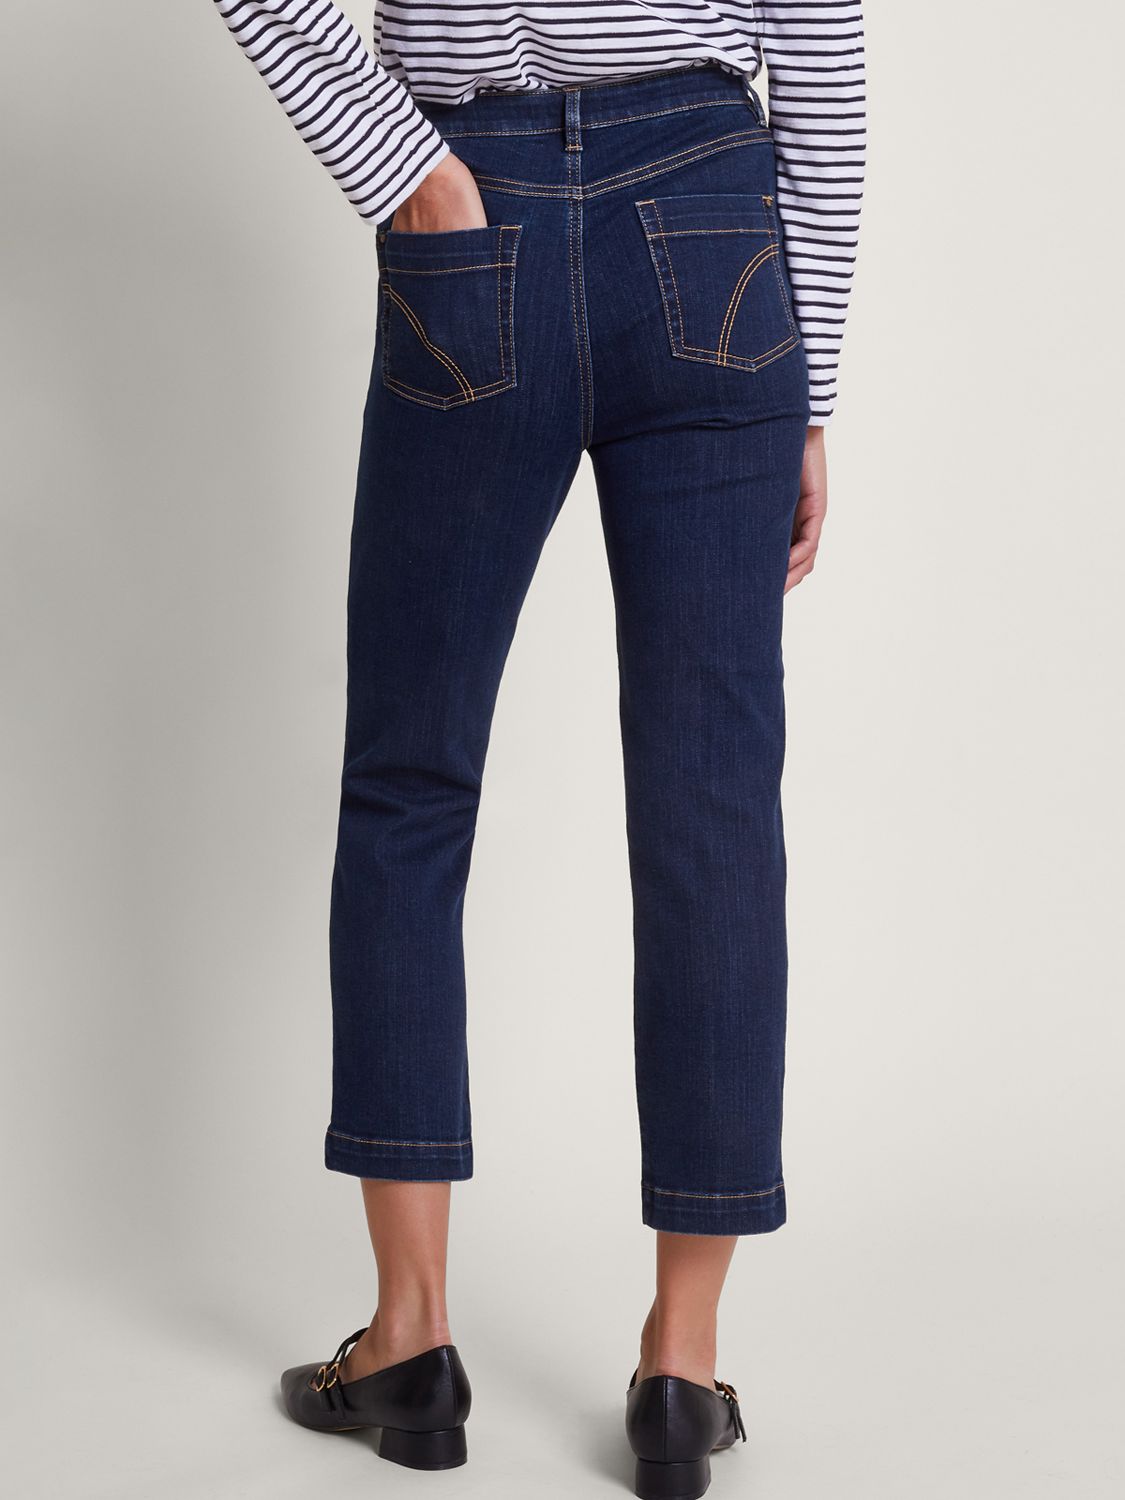 Buy Monsoon Safaia 7/8 Jeans, Denim Online at johnlewis.com